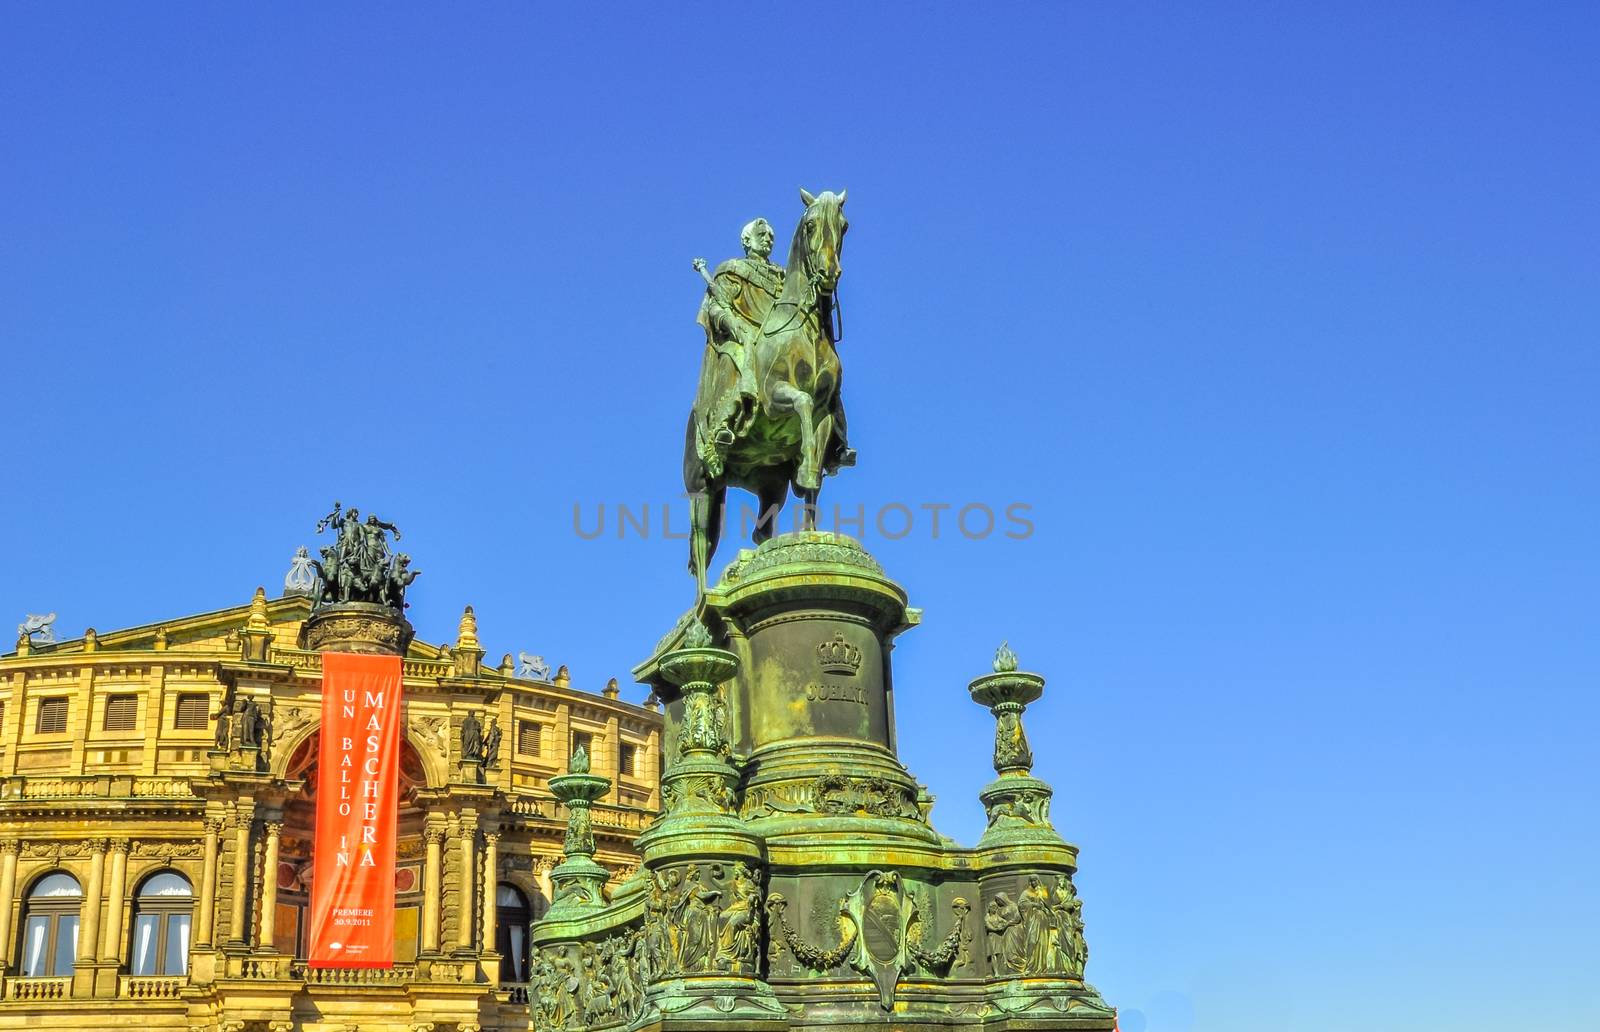 Semper Opera Statue in Dresden by weltreisendertj